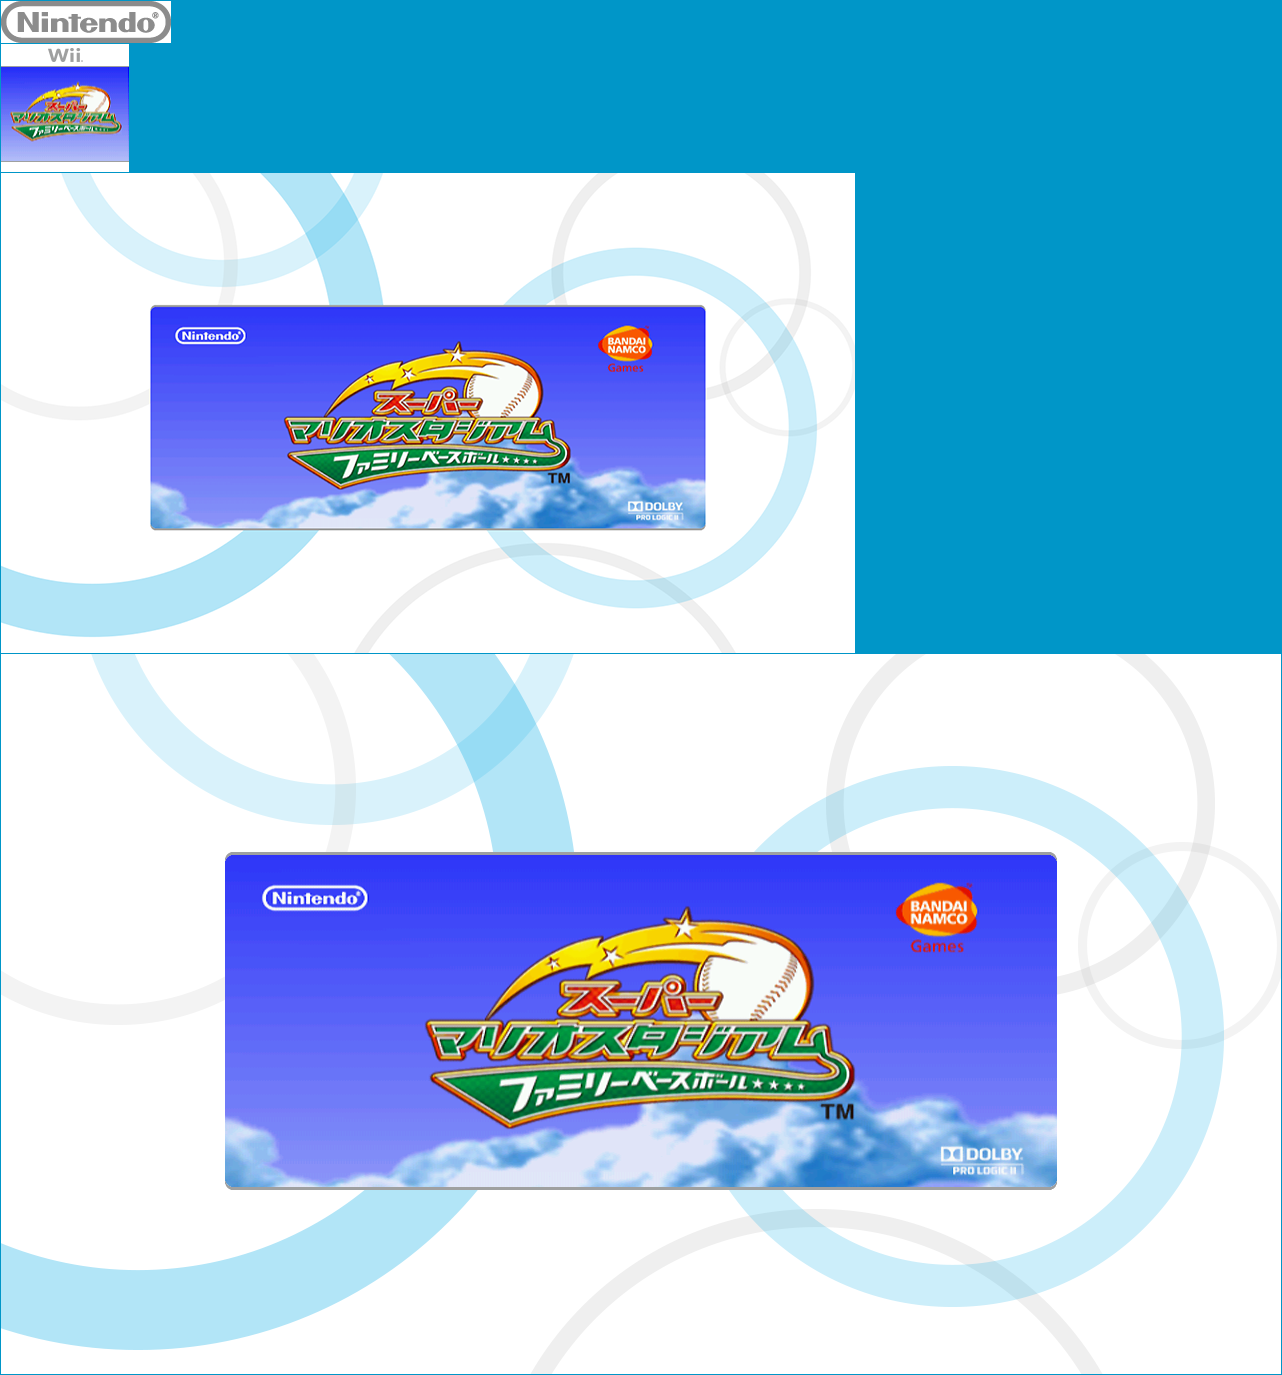 Virtual Console - Super Mario Stadium Family Baseball